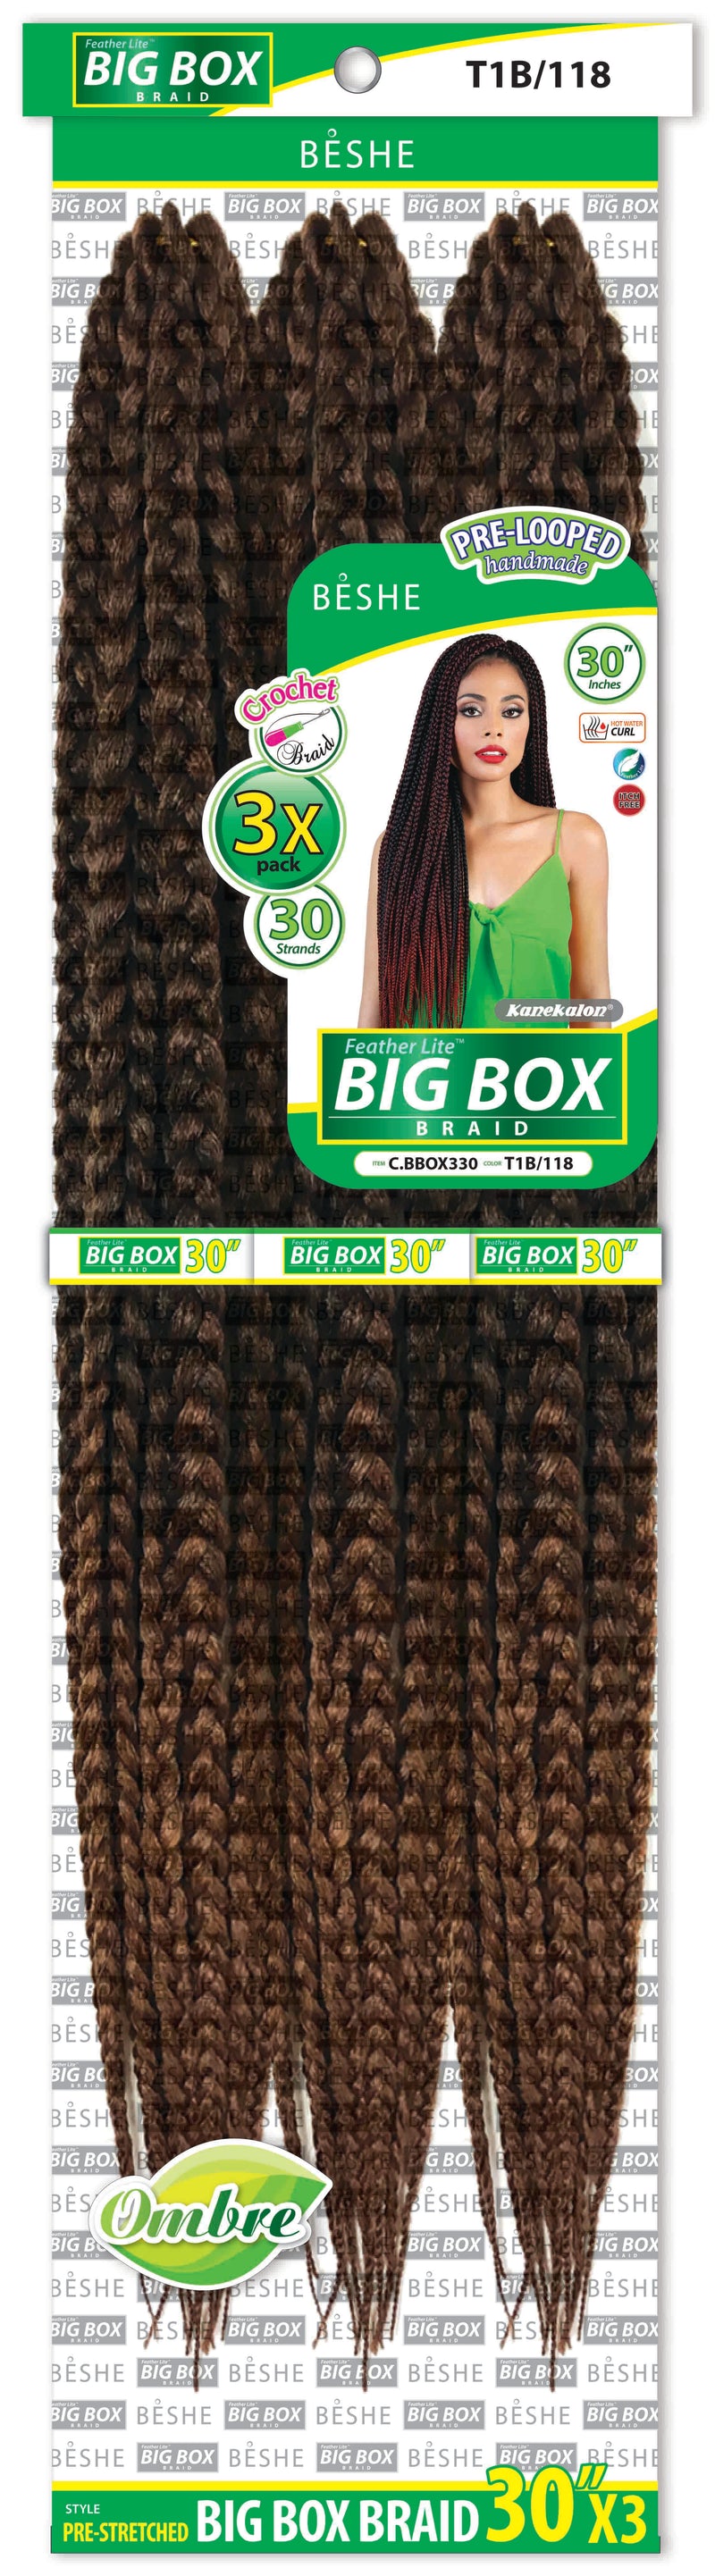 Beshe Crochet Braid Feather Lite 3x BIG BOX Braid C.BBOX330 - Elevate Styles